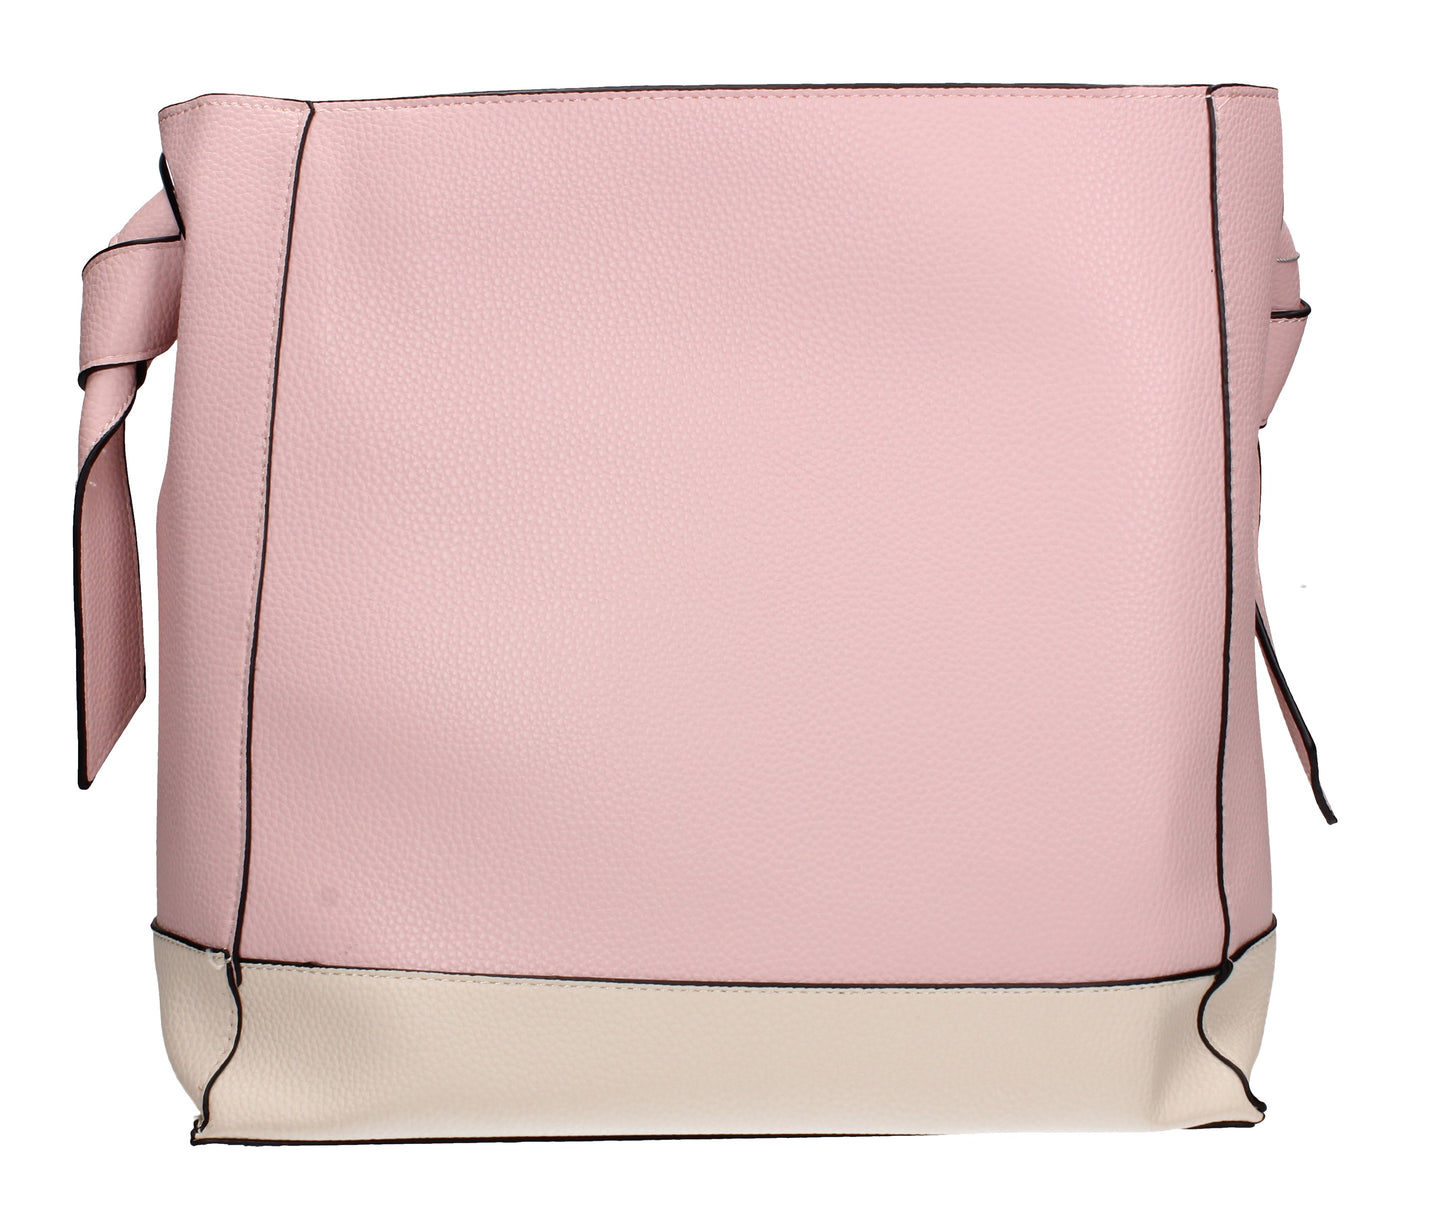 Swanky Swans Leanne Handbag Pink & BeigePerfect for School, Weddings, Day out!